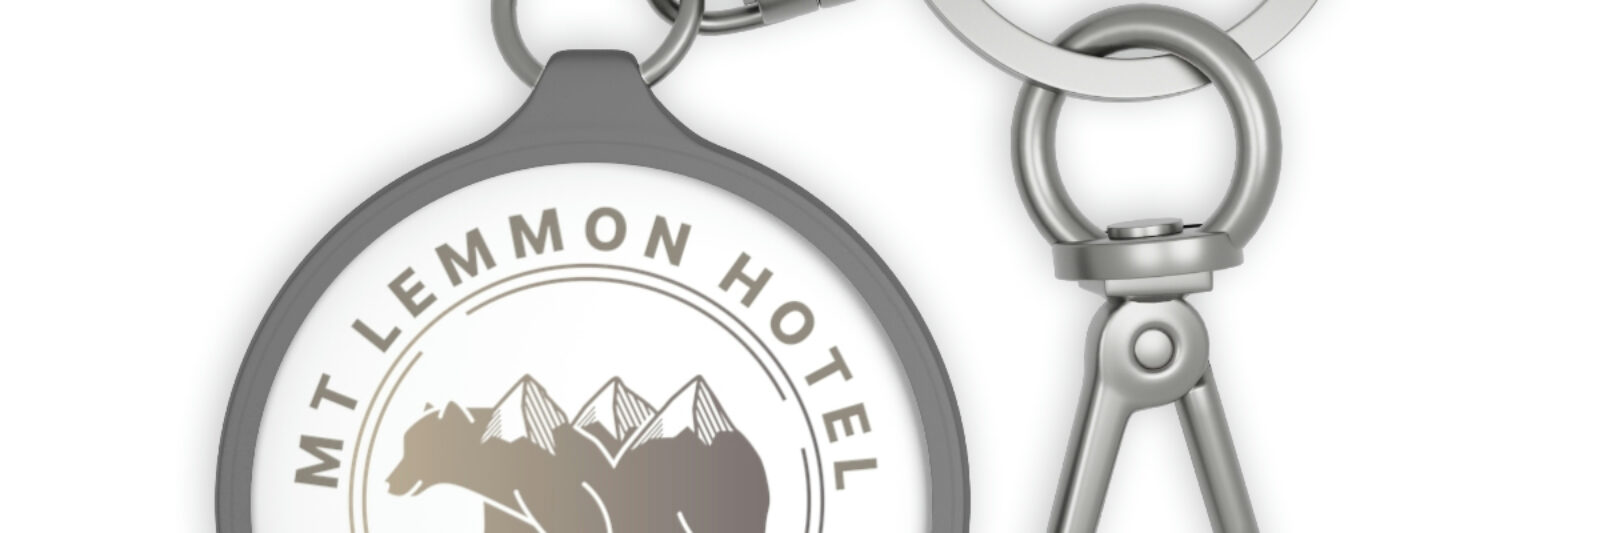 Mount Lemmon Hotel Keyring Tag front image